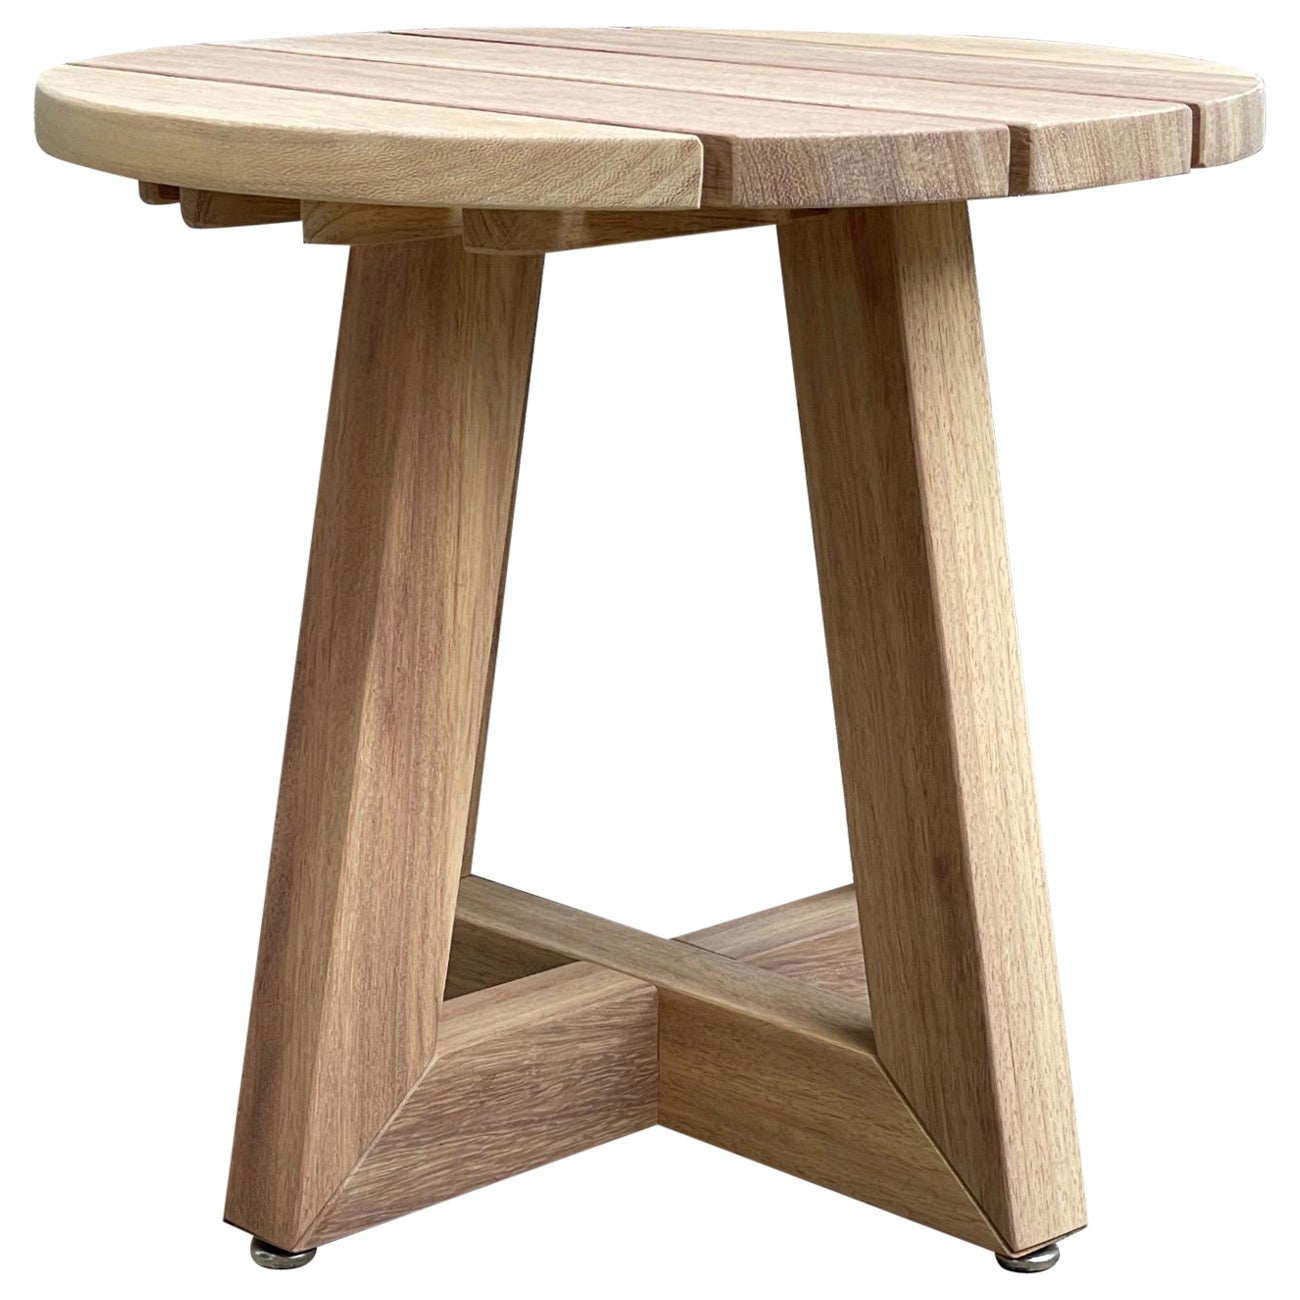 24” diameter teak outdoor side table For Sale